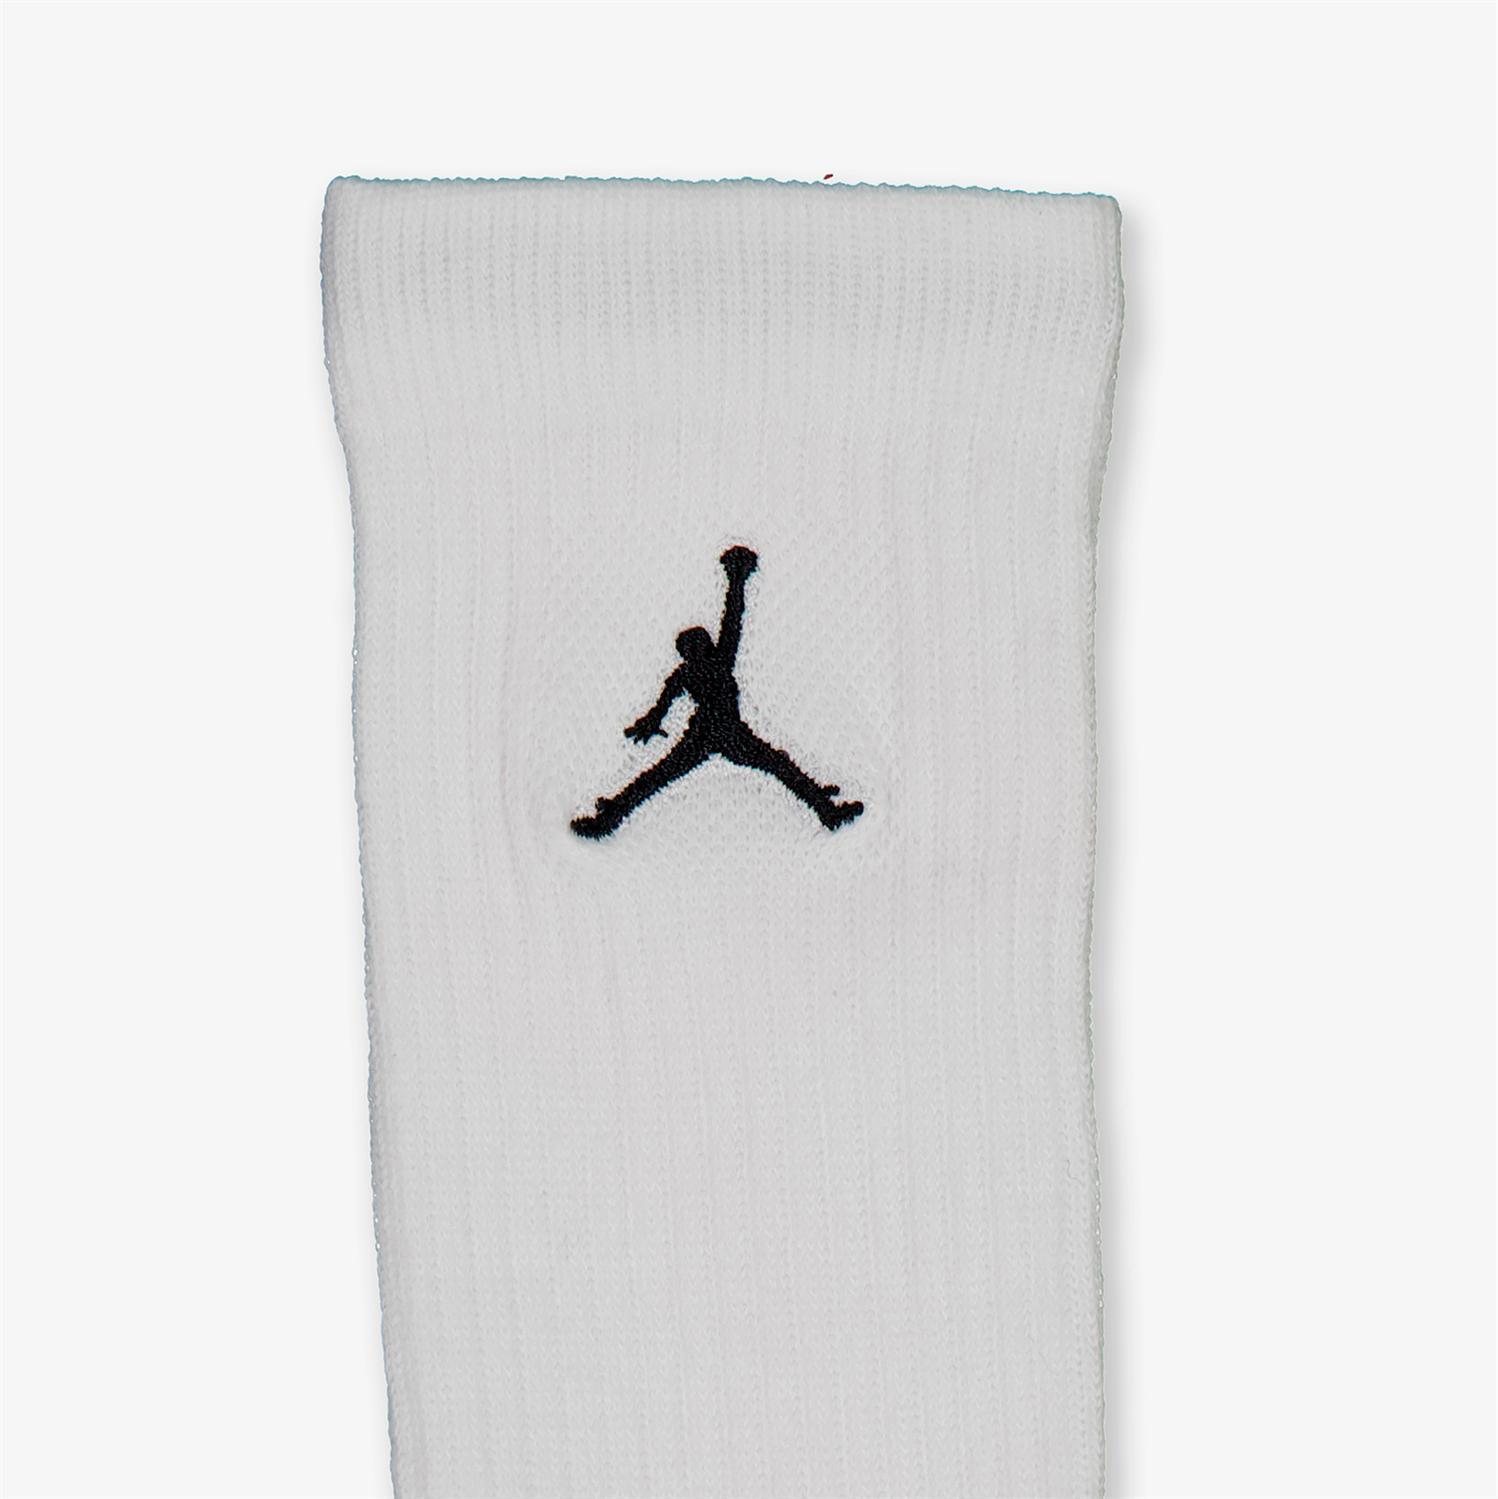 Nike Jordan Wit Sokken Kinderen